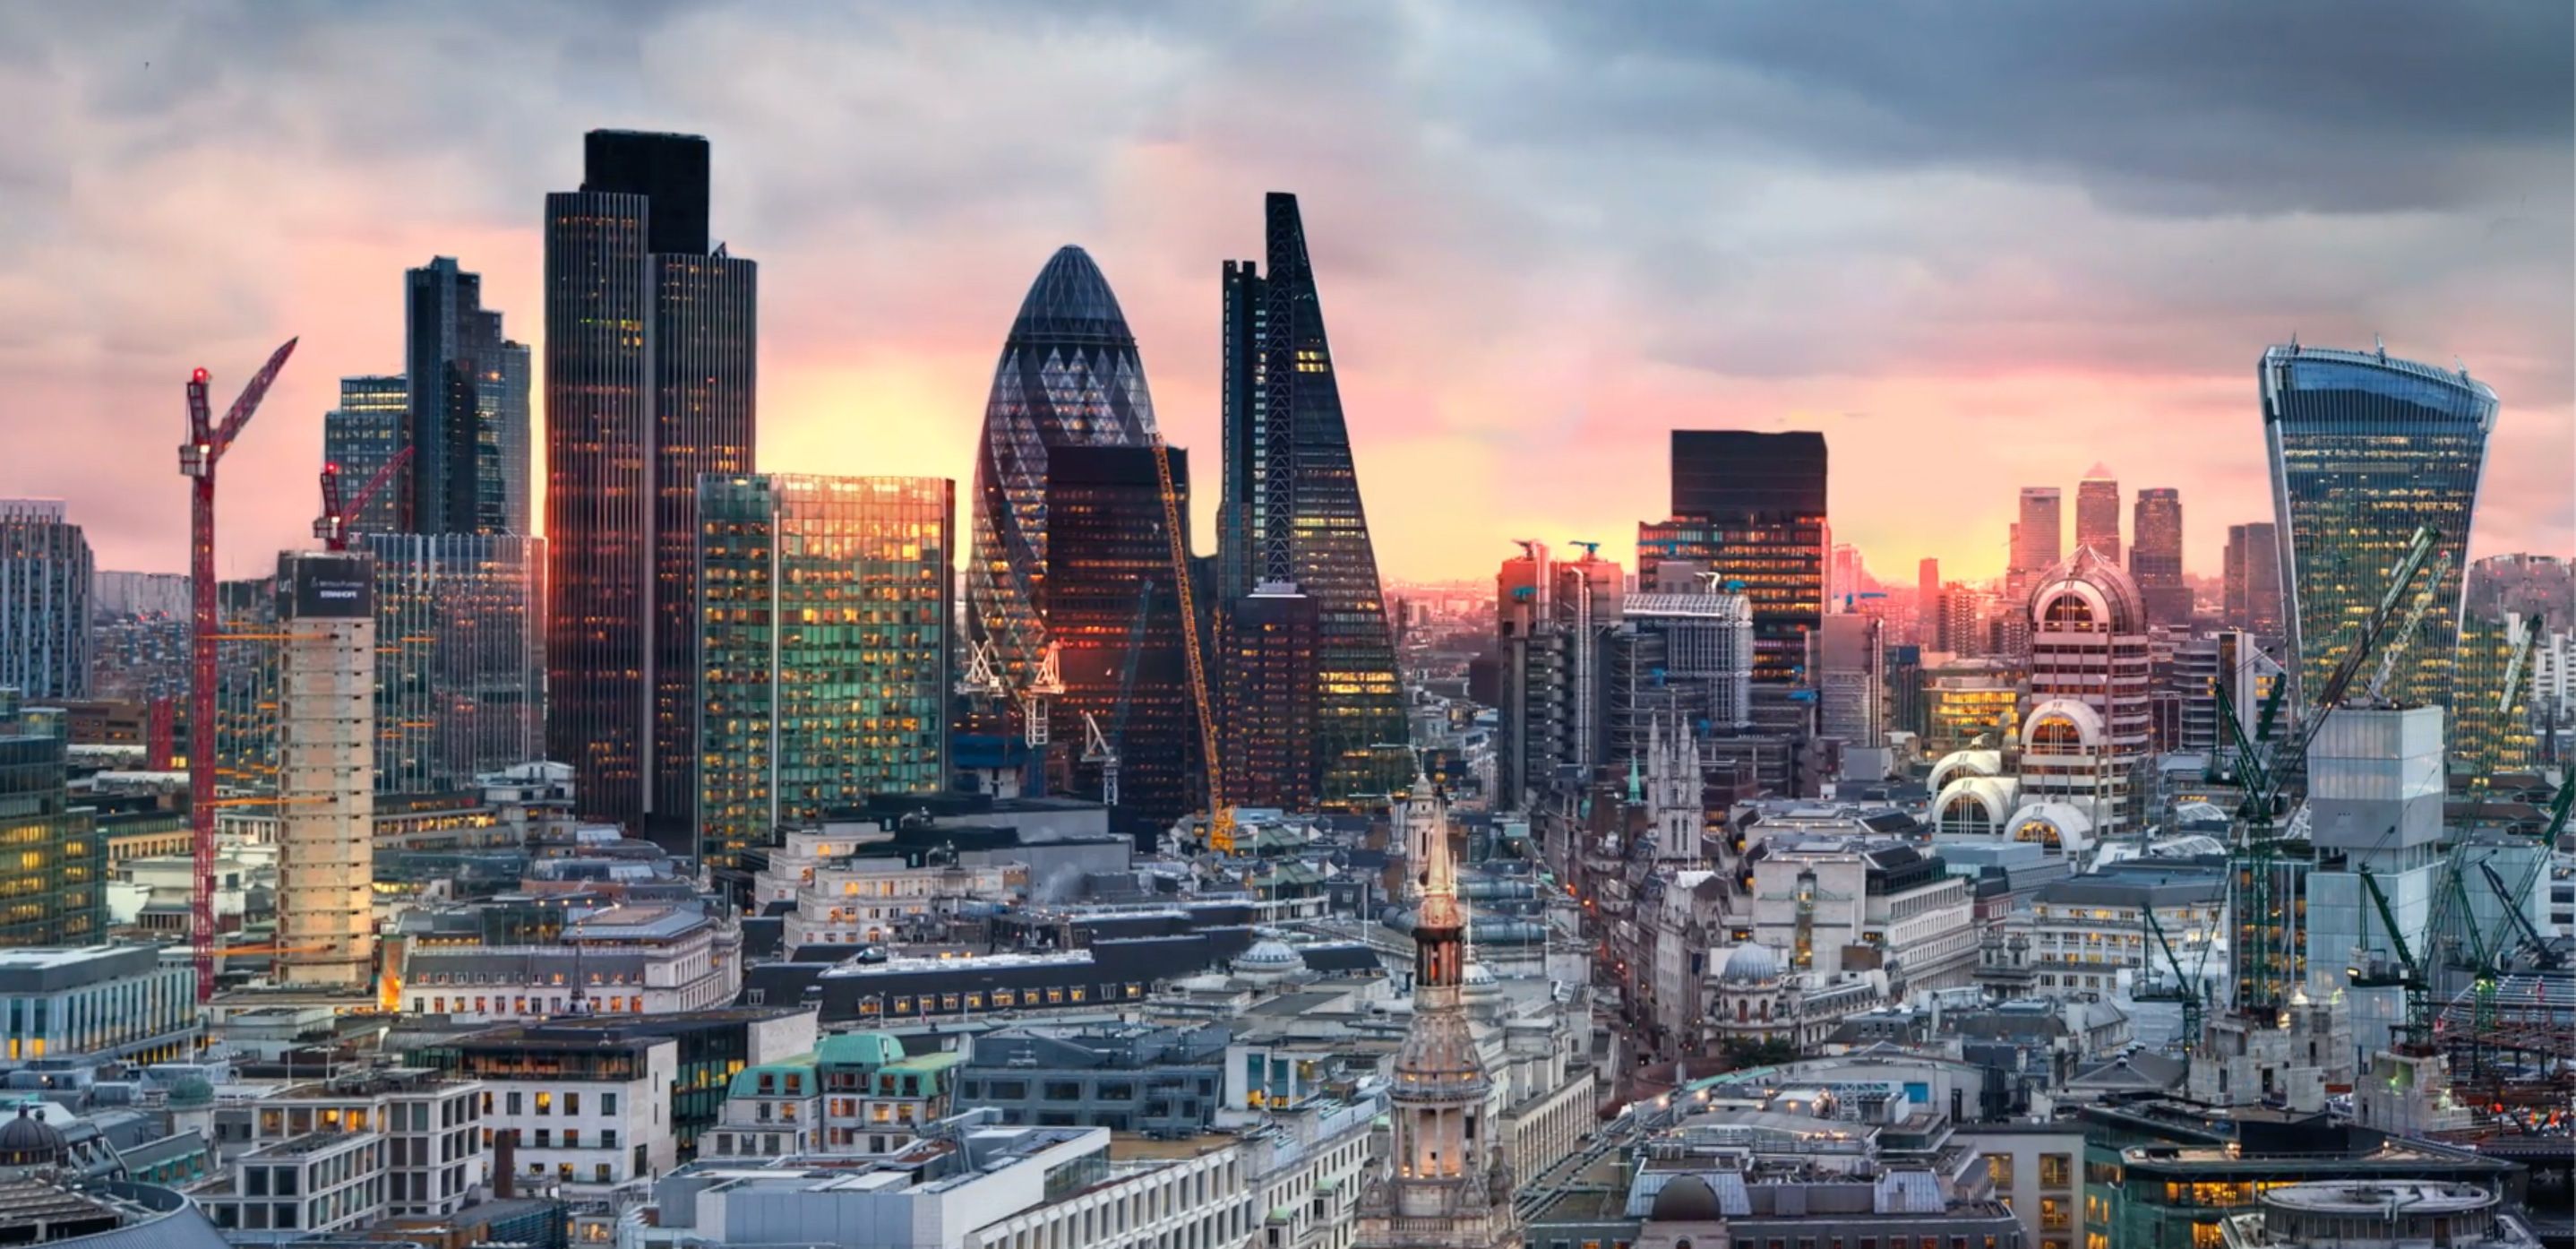 MEET OUR EXHIBITORS - London Build 2021 - THE LEADING CONSTRUCTION ...